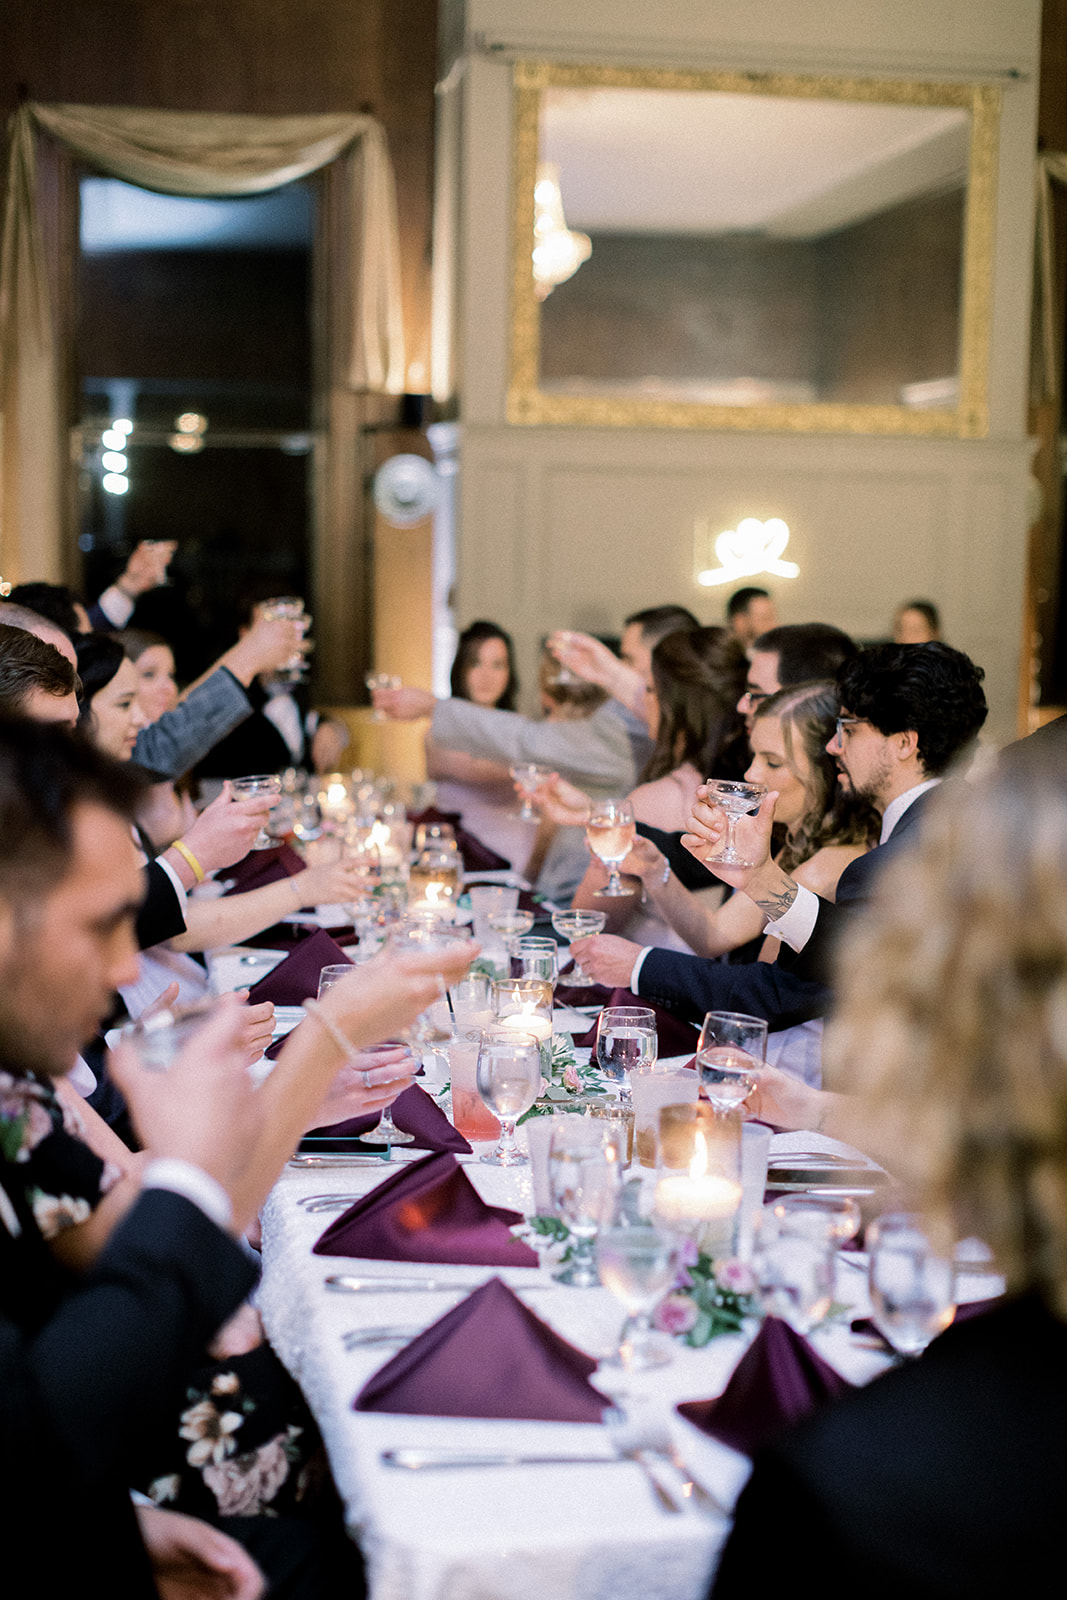 Pennsylvania wedding photographer captures indoor wedding reception with guests toasting